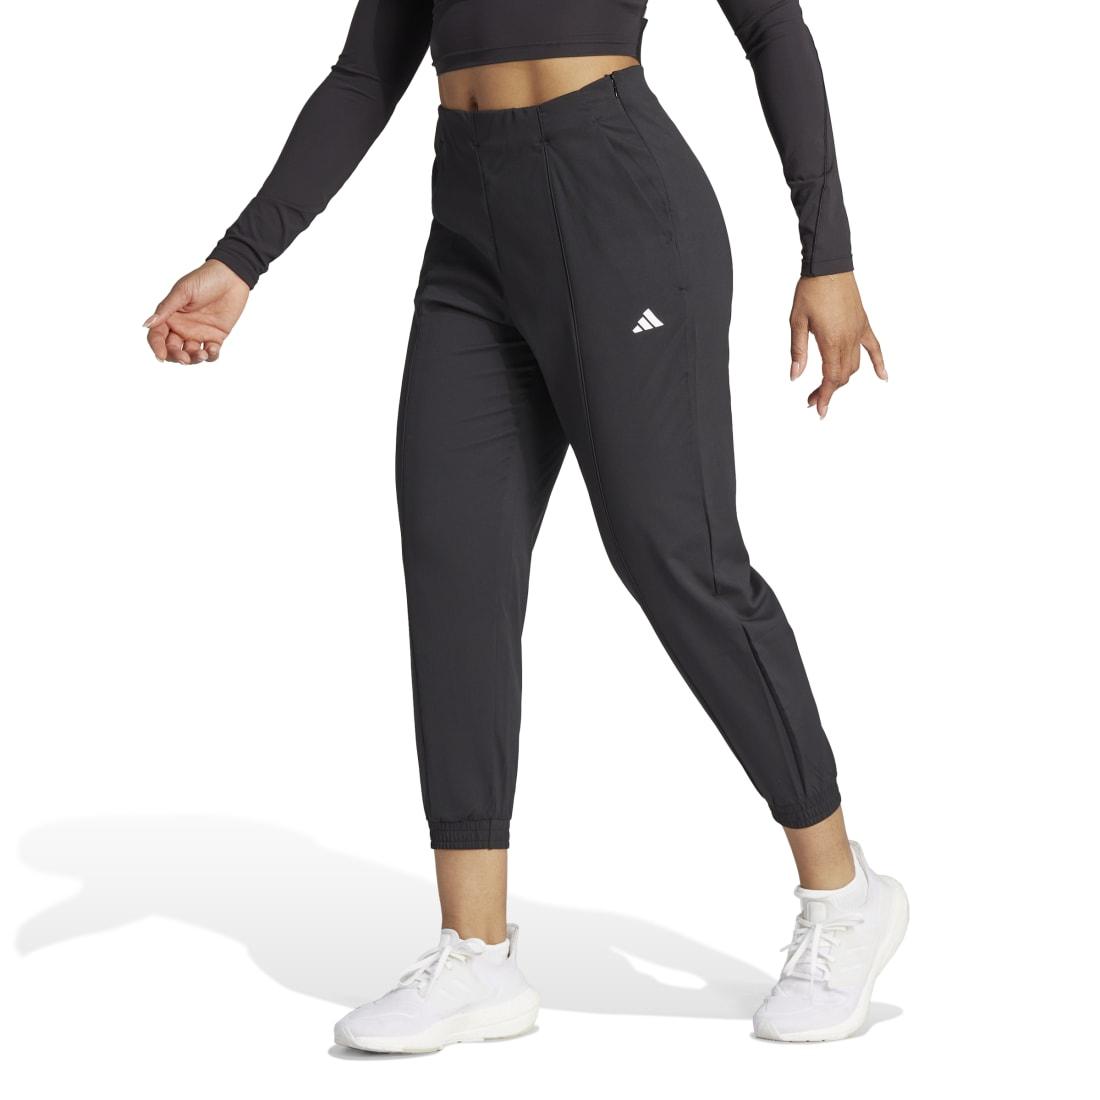 Adidas-workout-pants-women